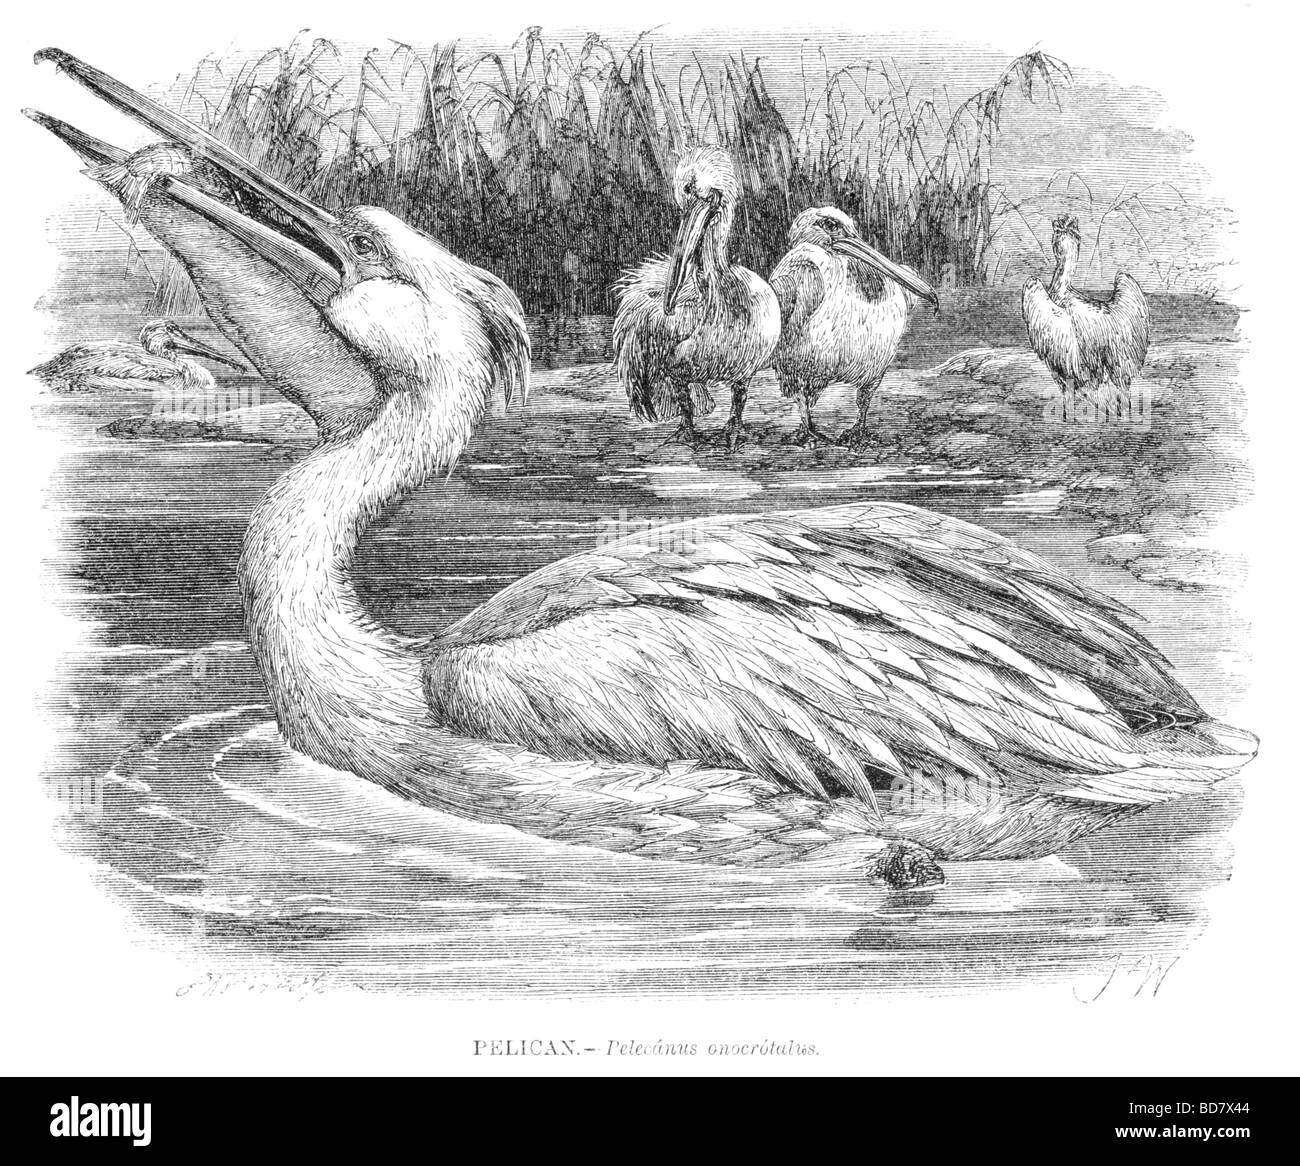 Pelican Pelecanus onocrotalus Banque D'Images